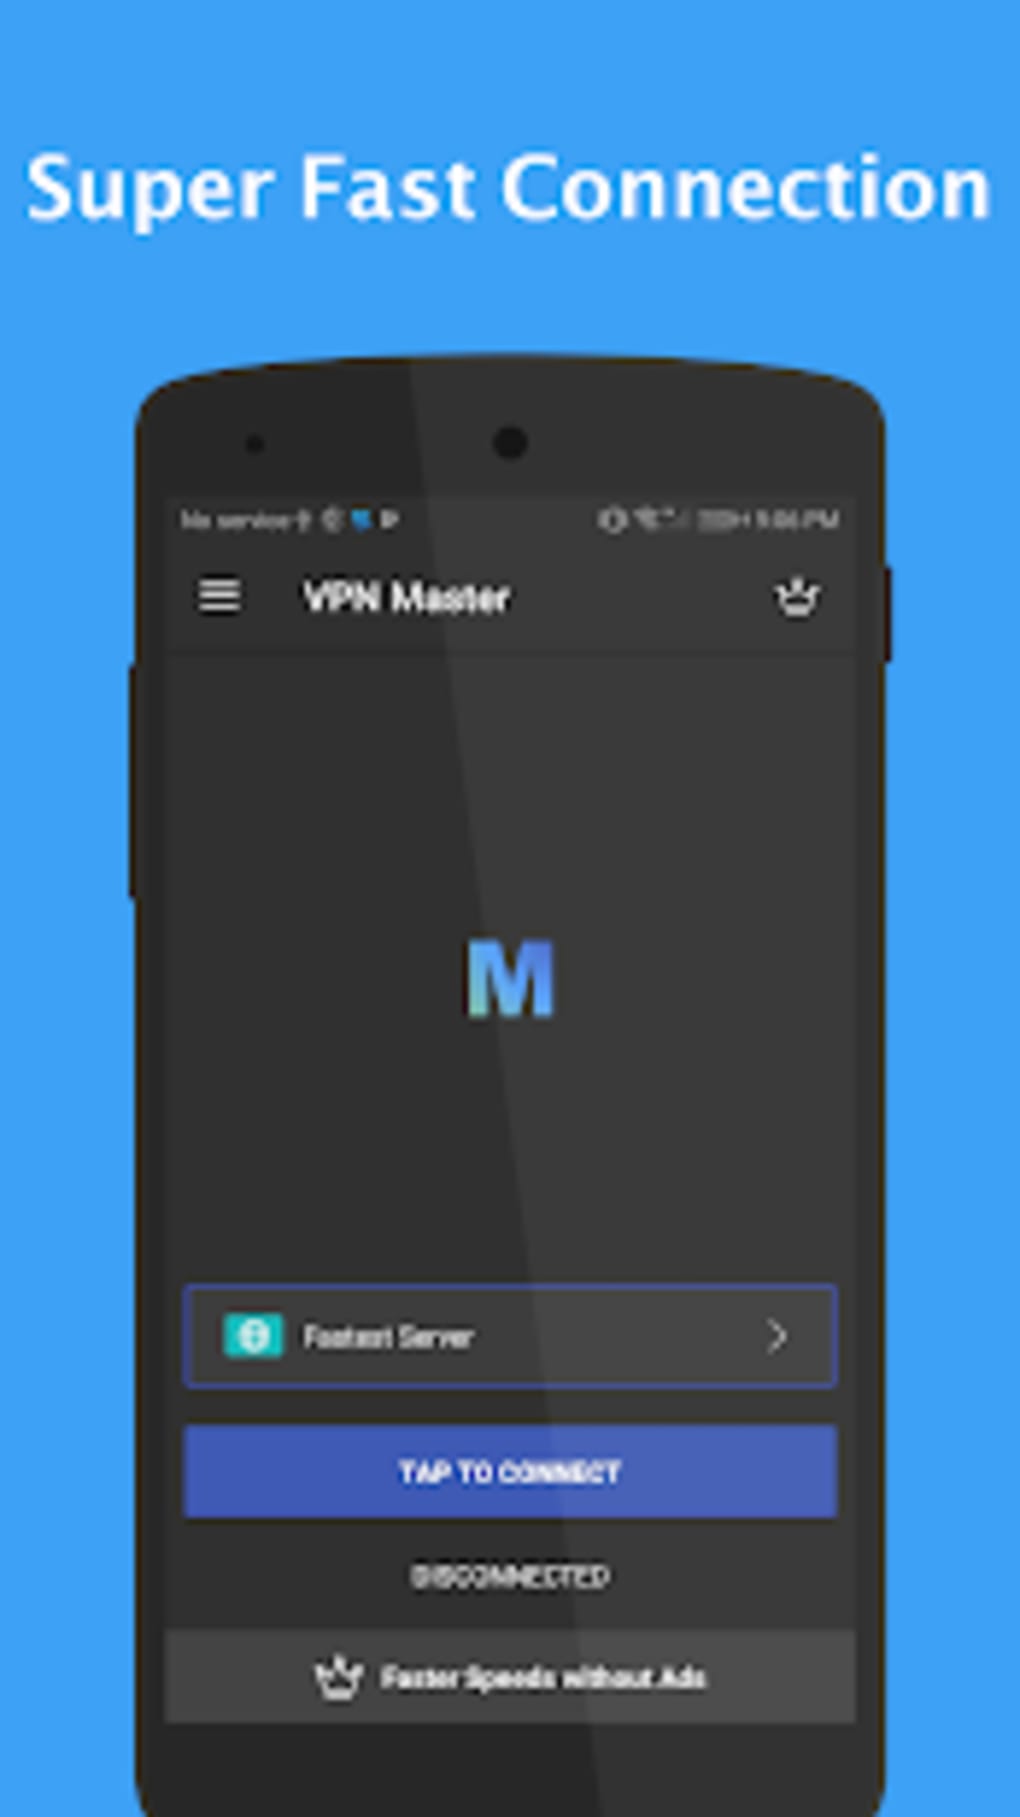 What is VPN Master APK?